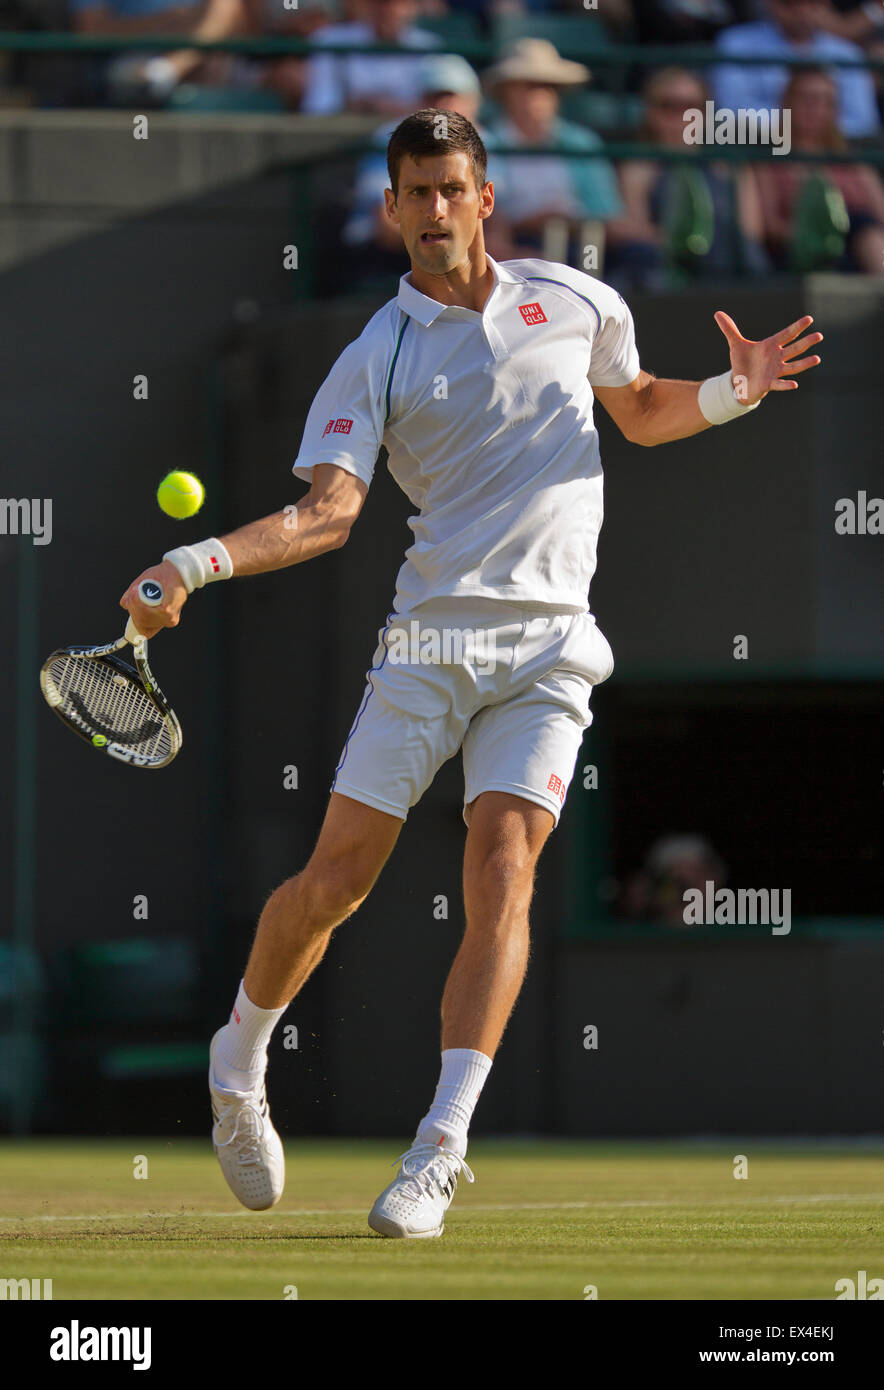 Wimbledon, Londres, Royaume-Uni. 6 juillet, 2015. Tennis, Wimbledon, Novak Djokovic (SRB) dans son match contre Kevin Anderson (RSA) Credit : Henk Koster/Alamy Live News Banque D'Images